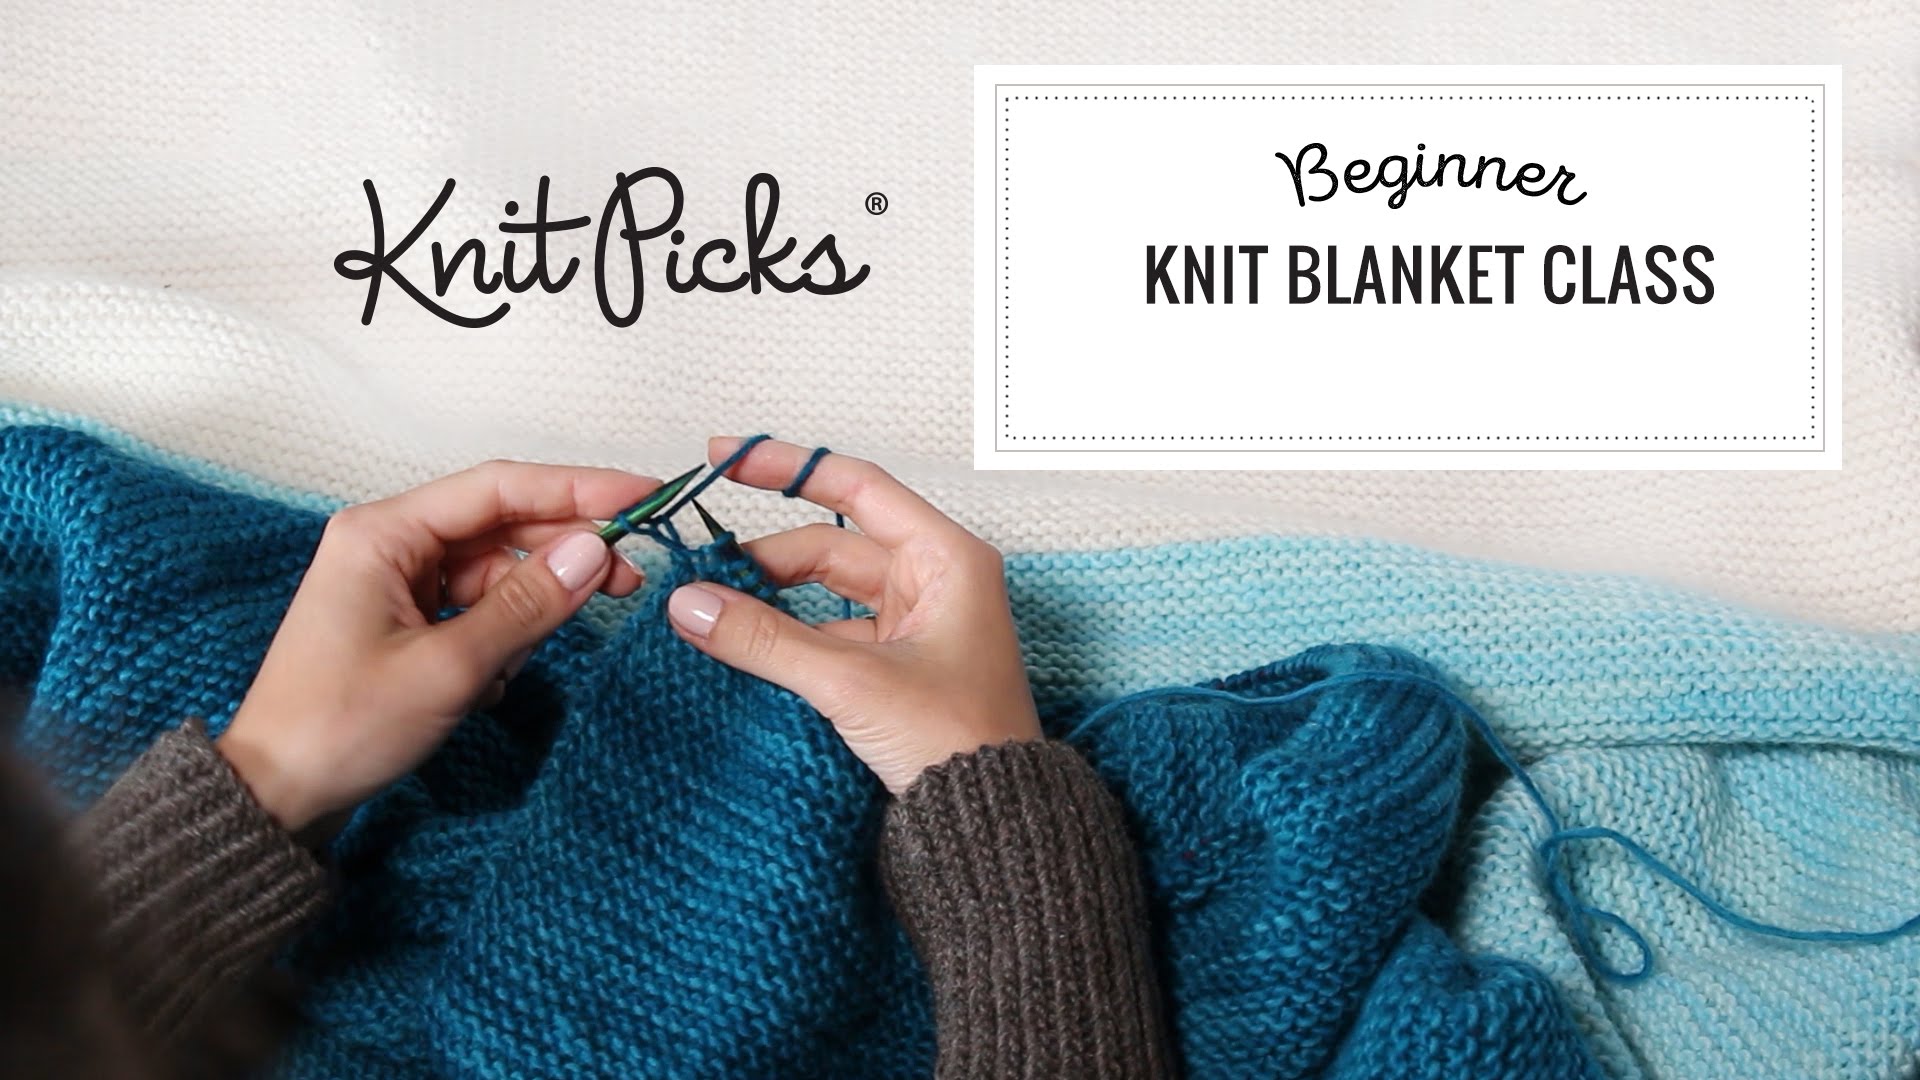 Knit Beginner Blanket Class ArchivesTutorials